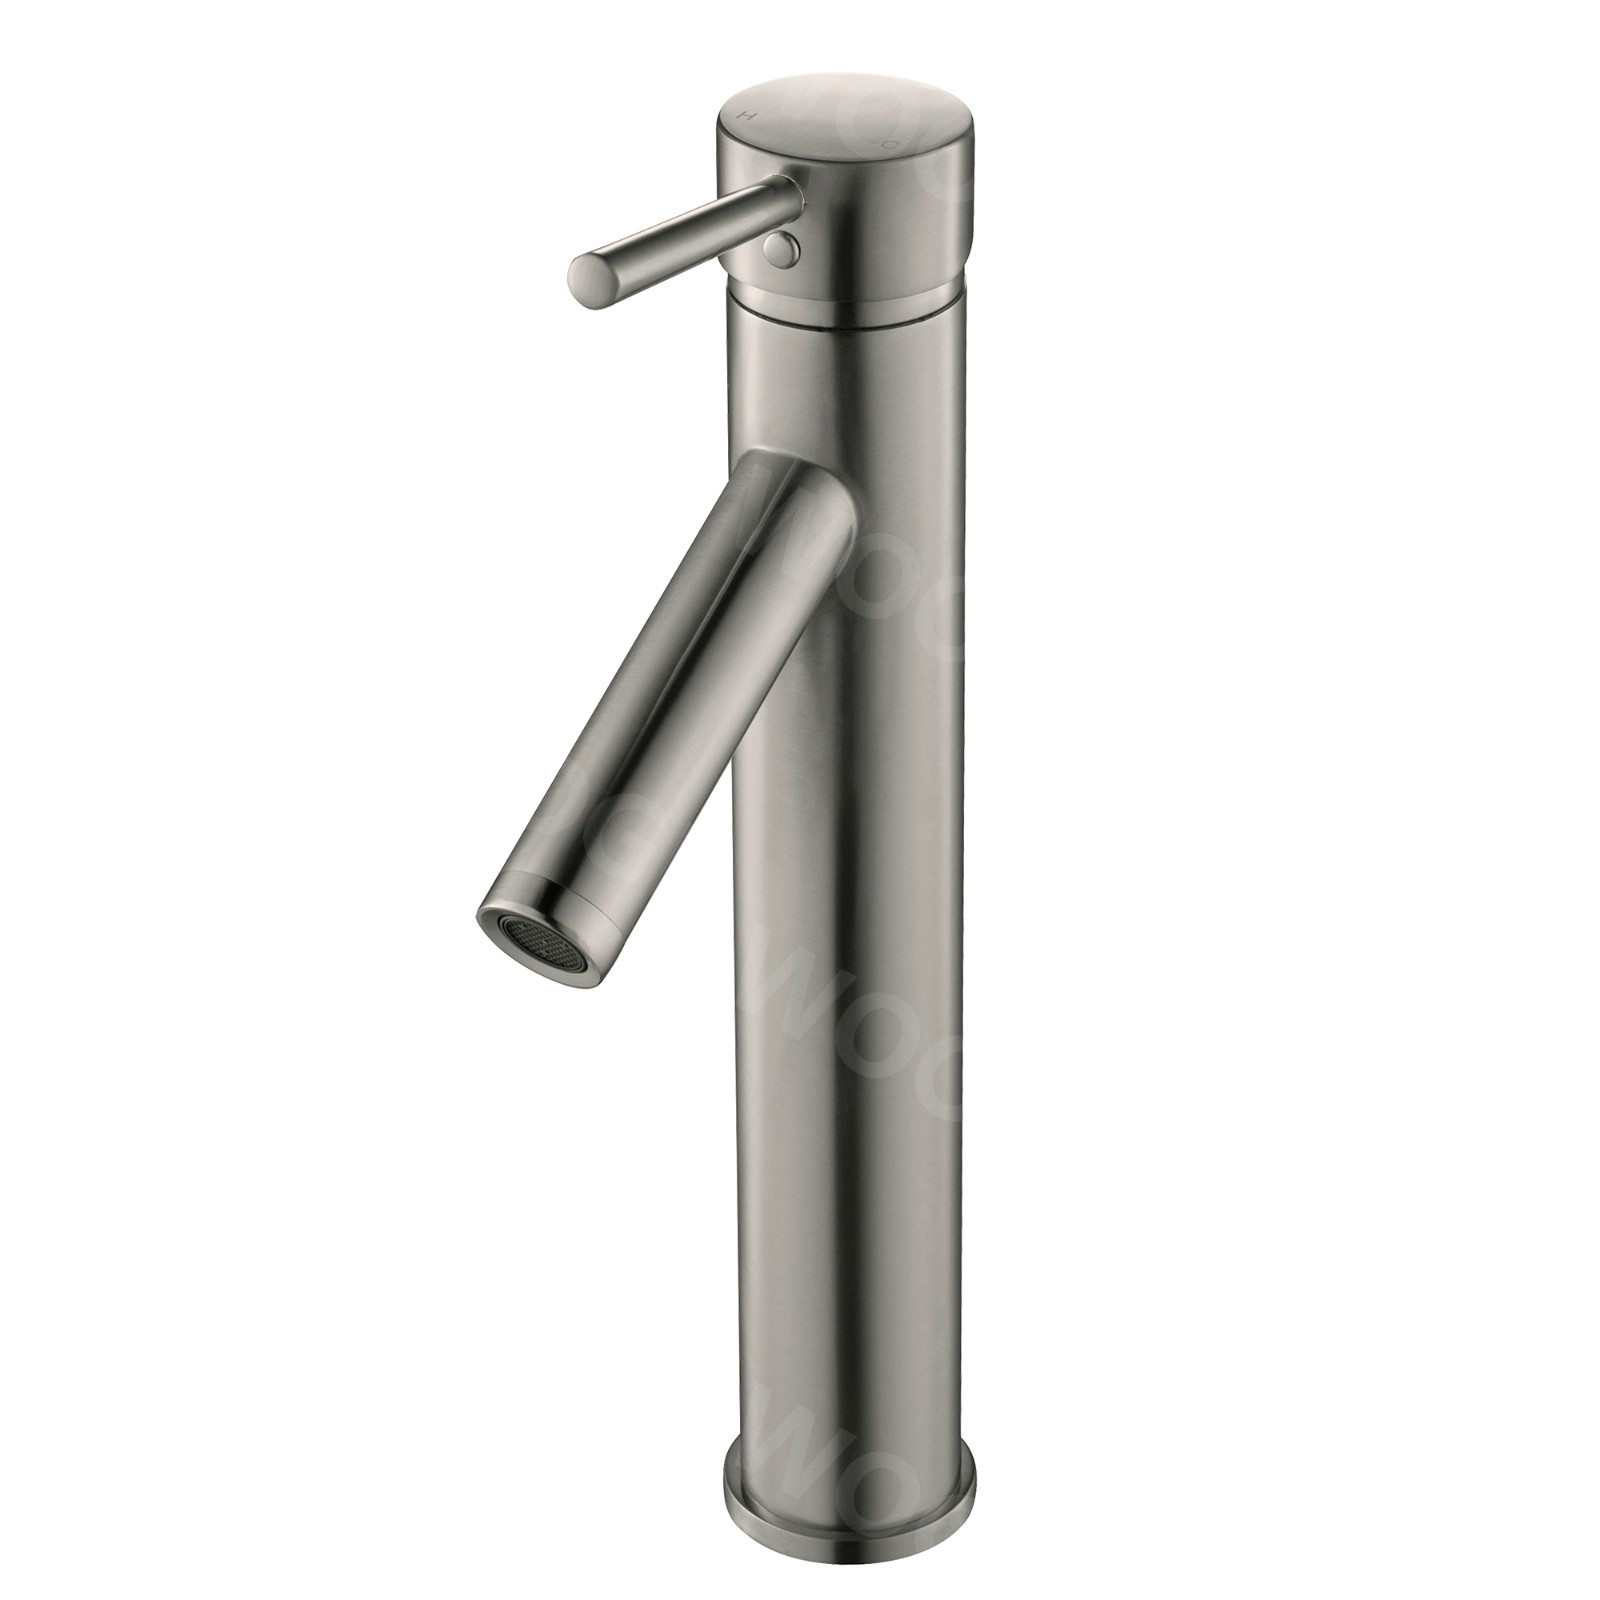  WOODBRIDGE WB2019040 BN Single Hole Single Handle Lavatory Faucet, Brushed Nickel_6314